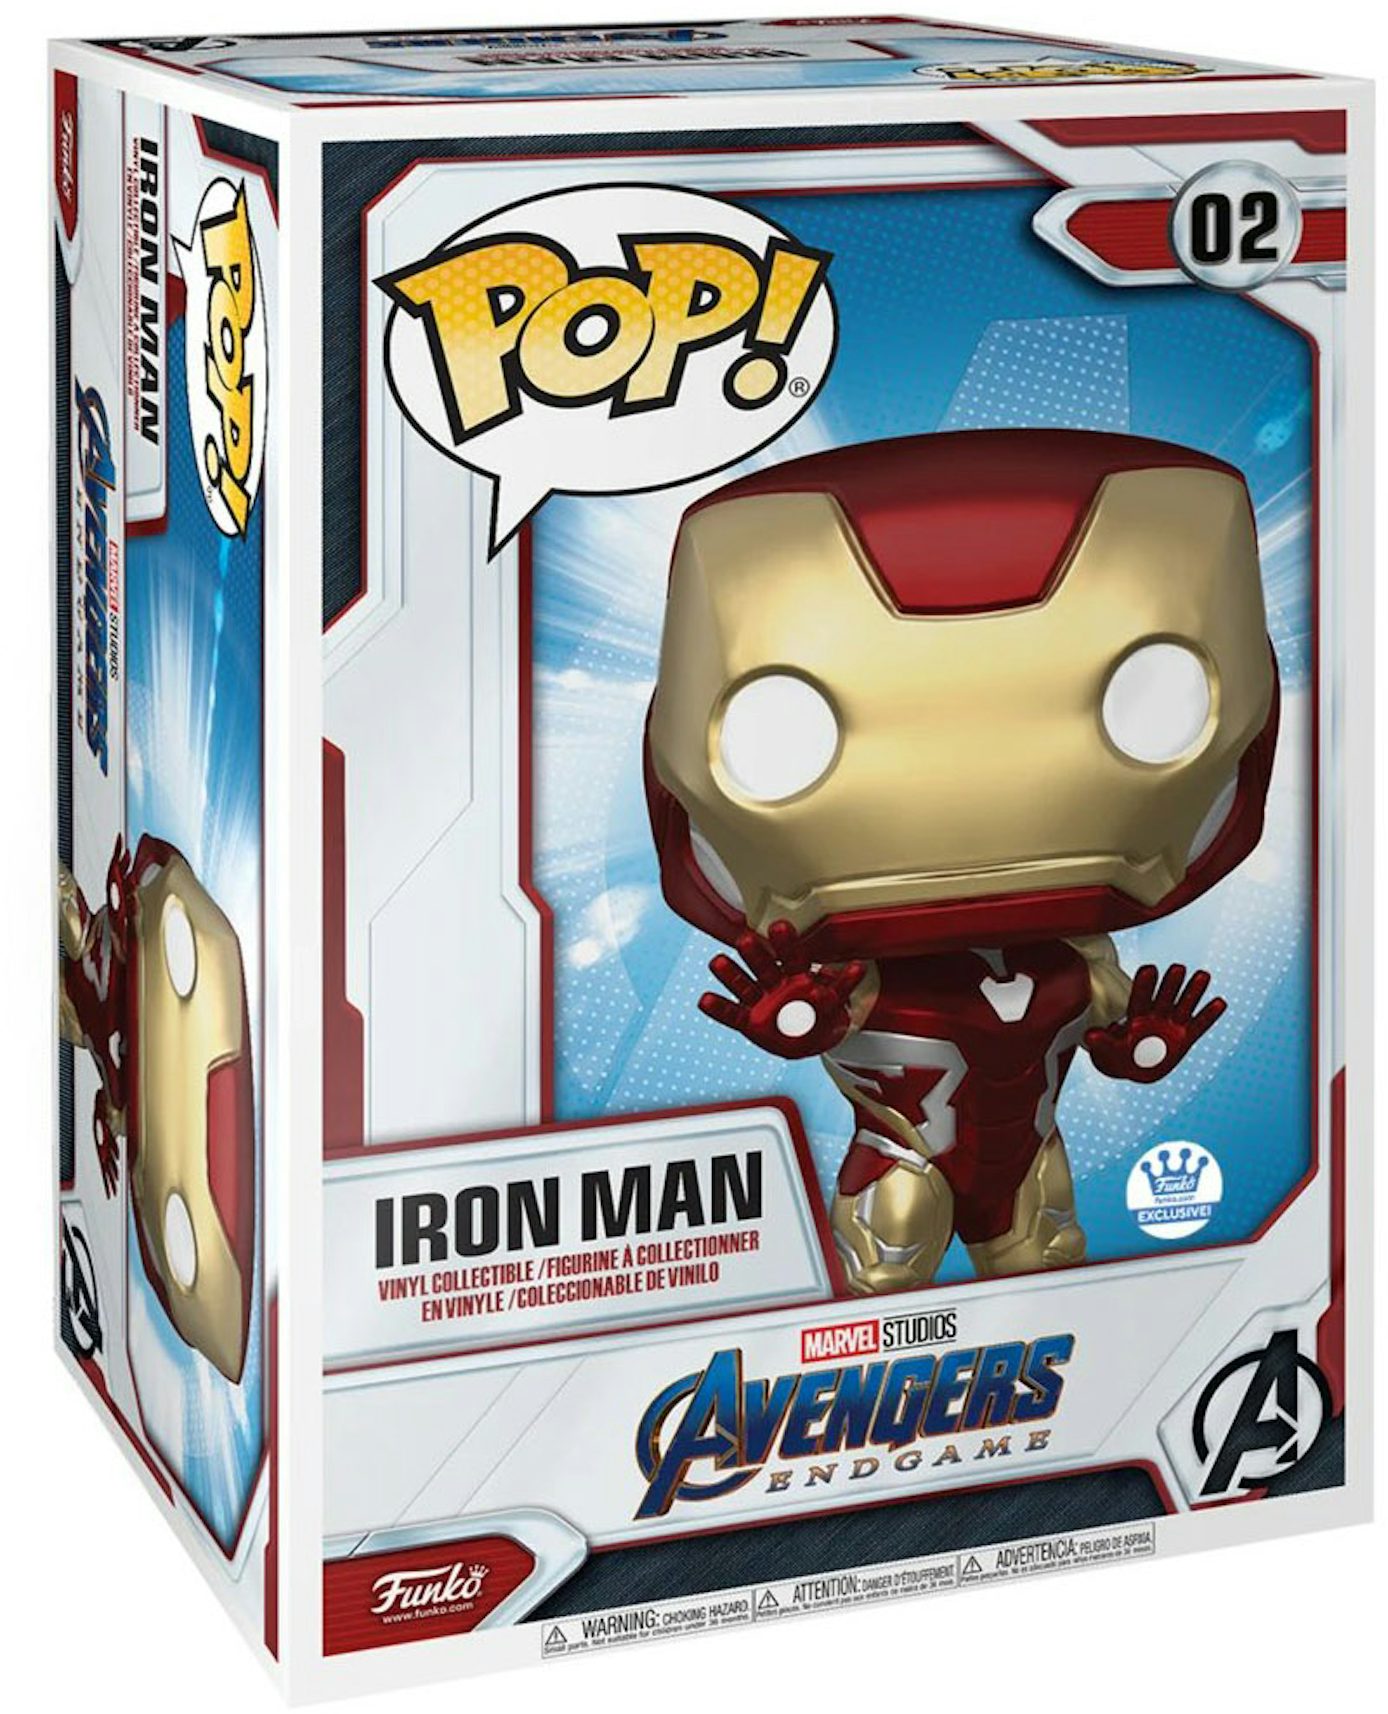 Funko Pop! Marvel Avengers End Game Iron Man 18 Inch Funko Shop Exclusive  Figure #02